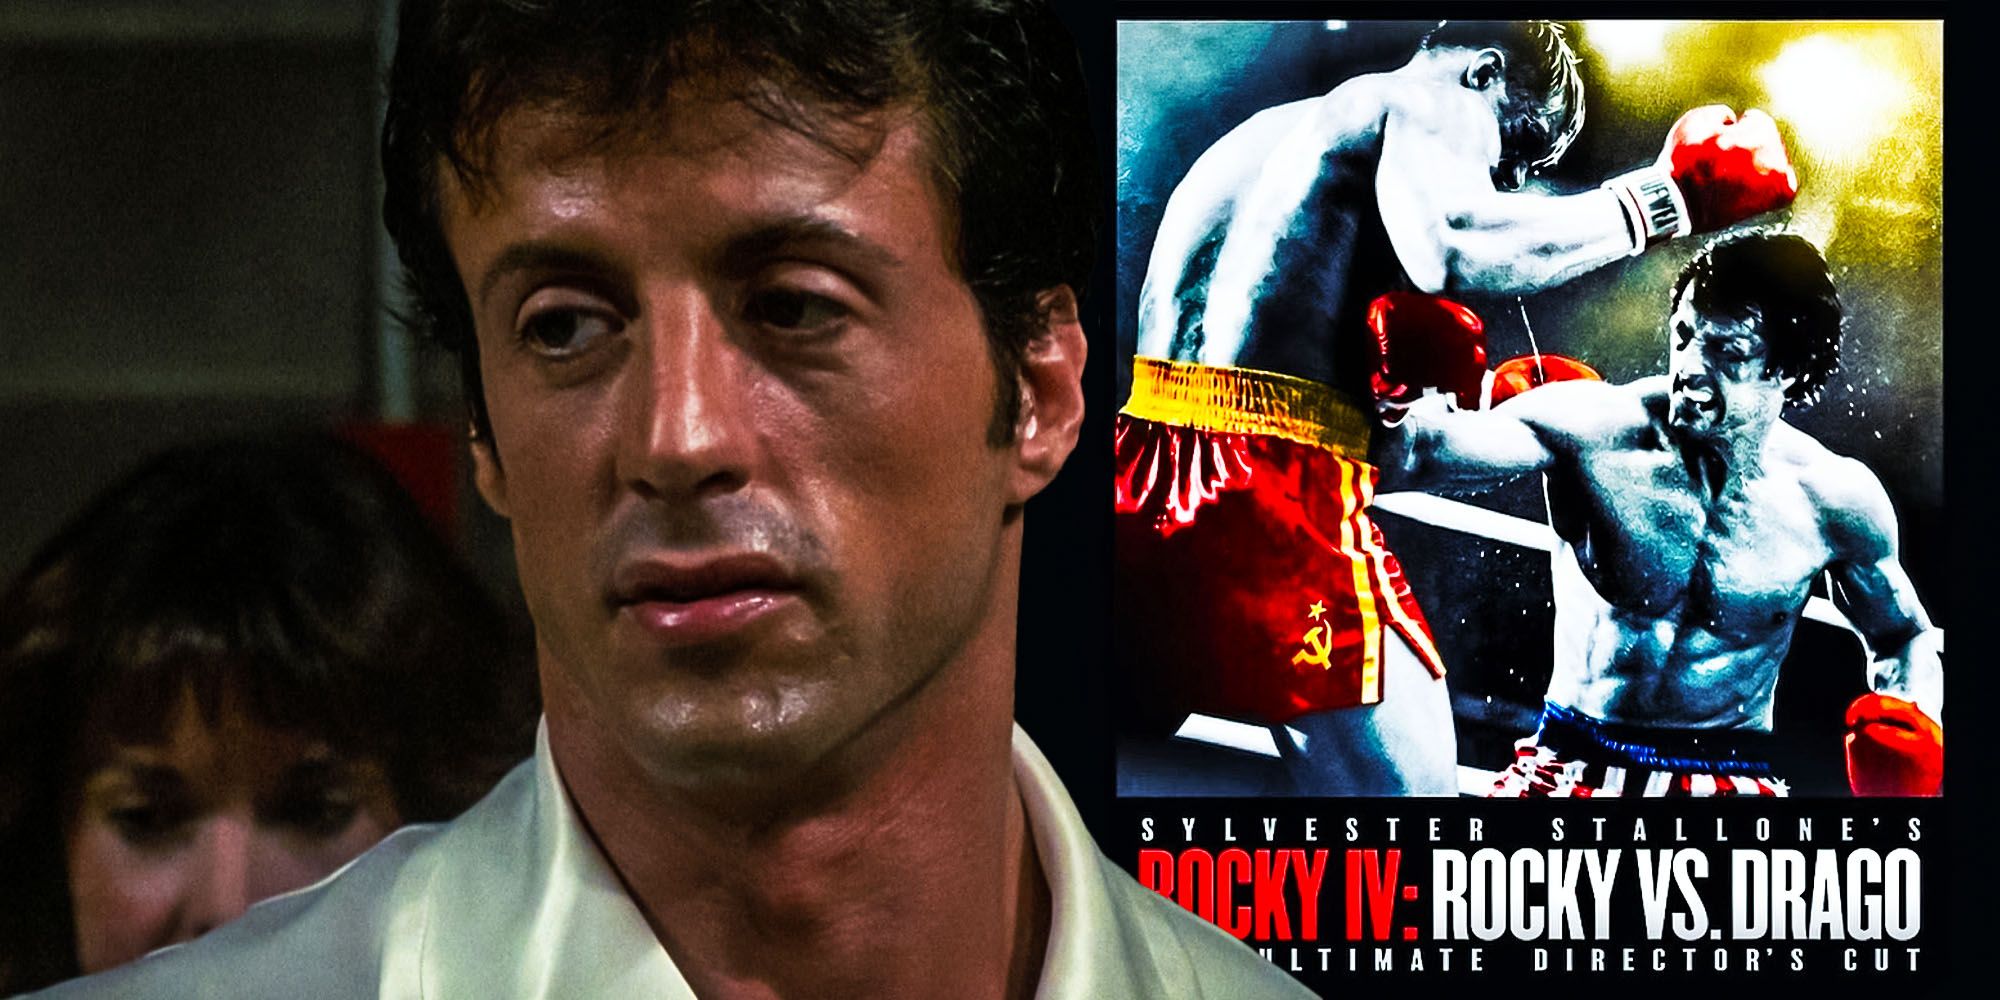 sylvester stallone Rocky 4 directors cut better